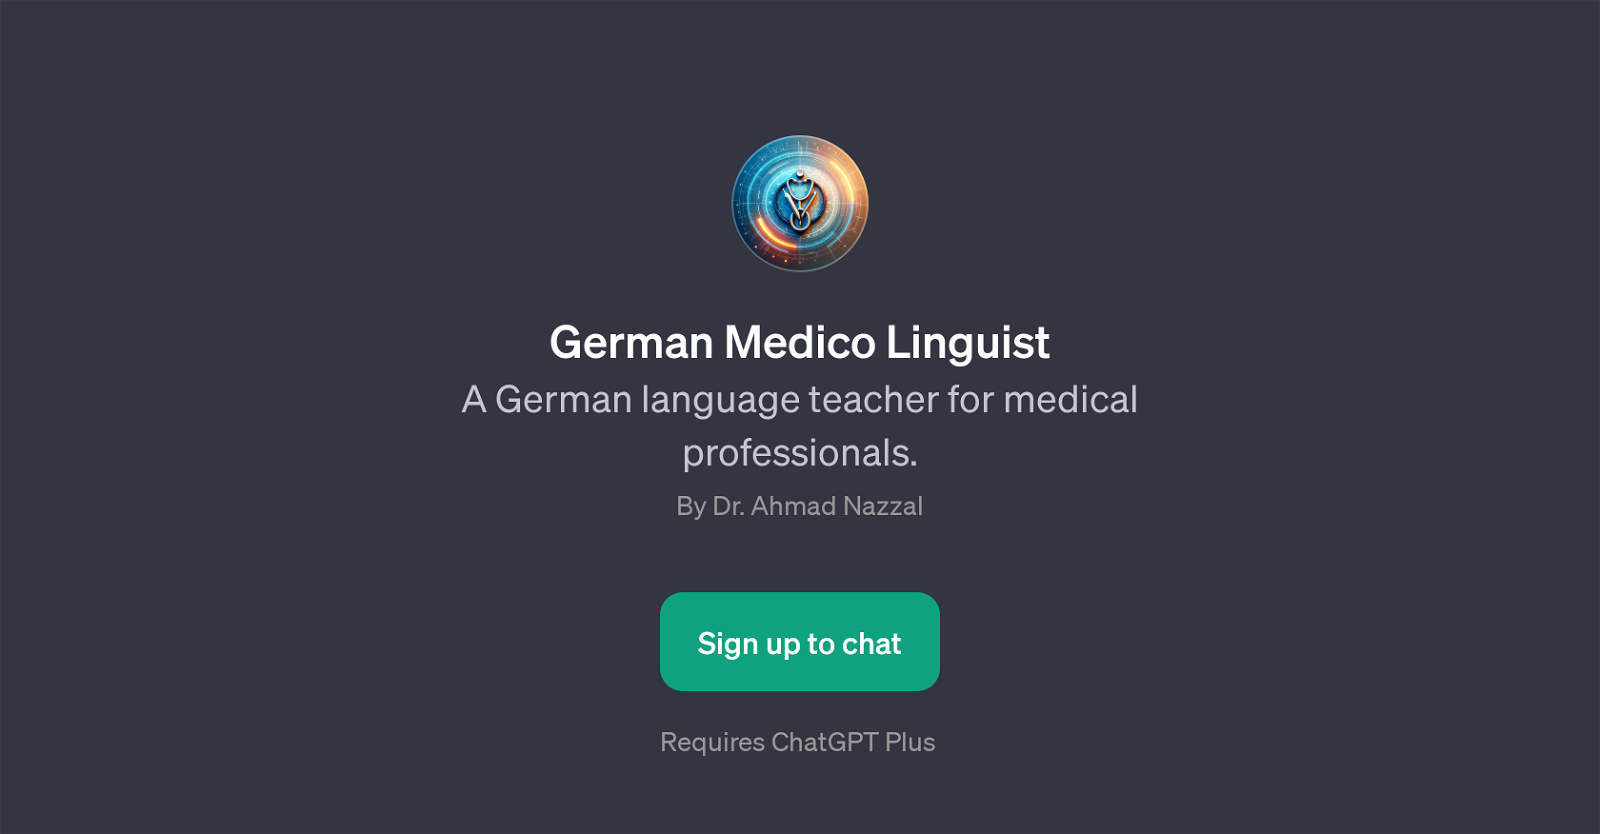 German Medico Linguist website